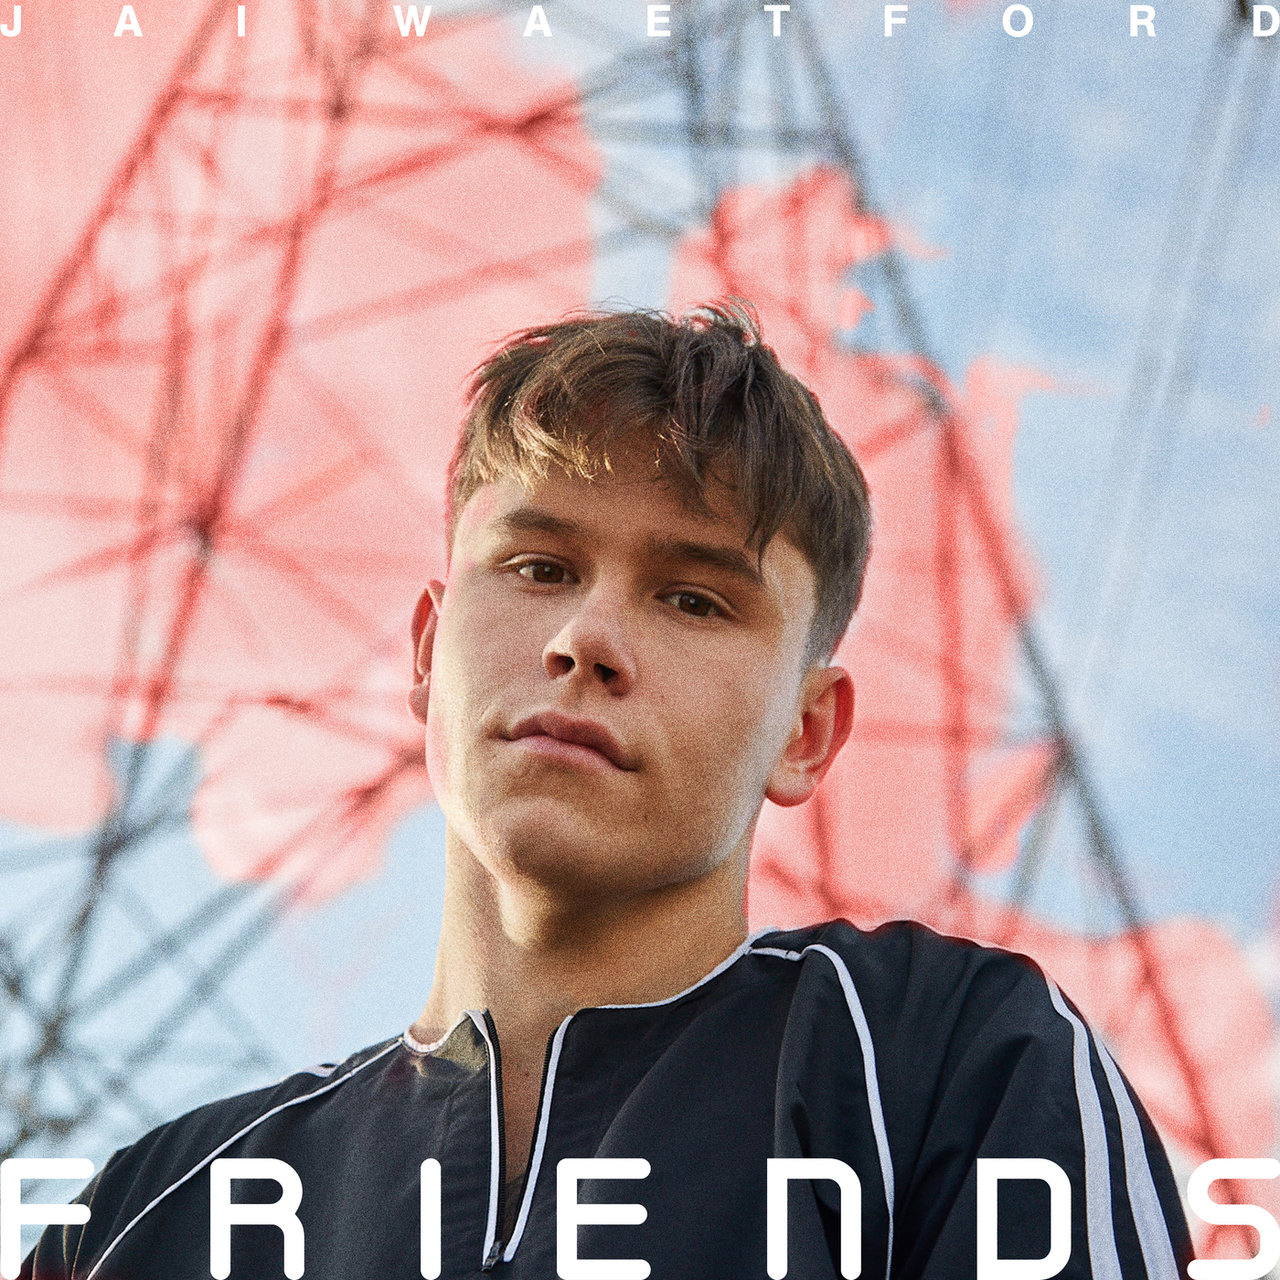 Jai Waetford — Friends cover artwork